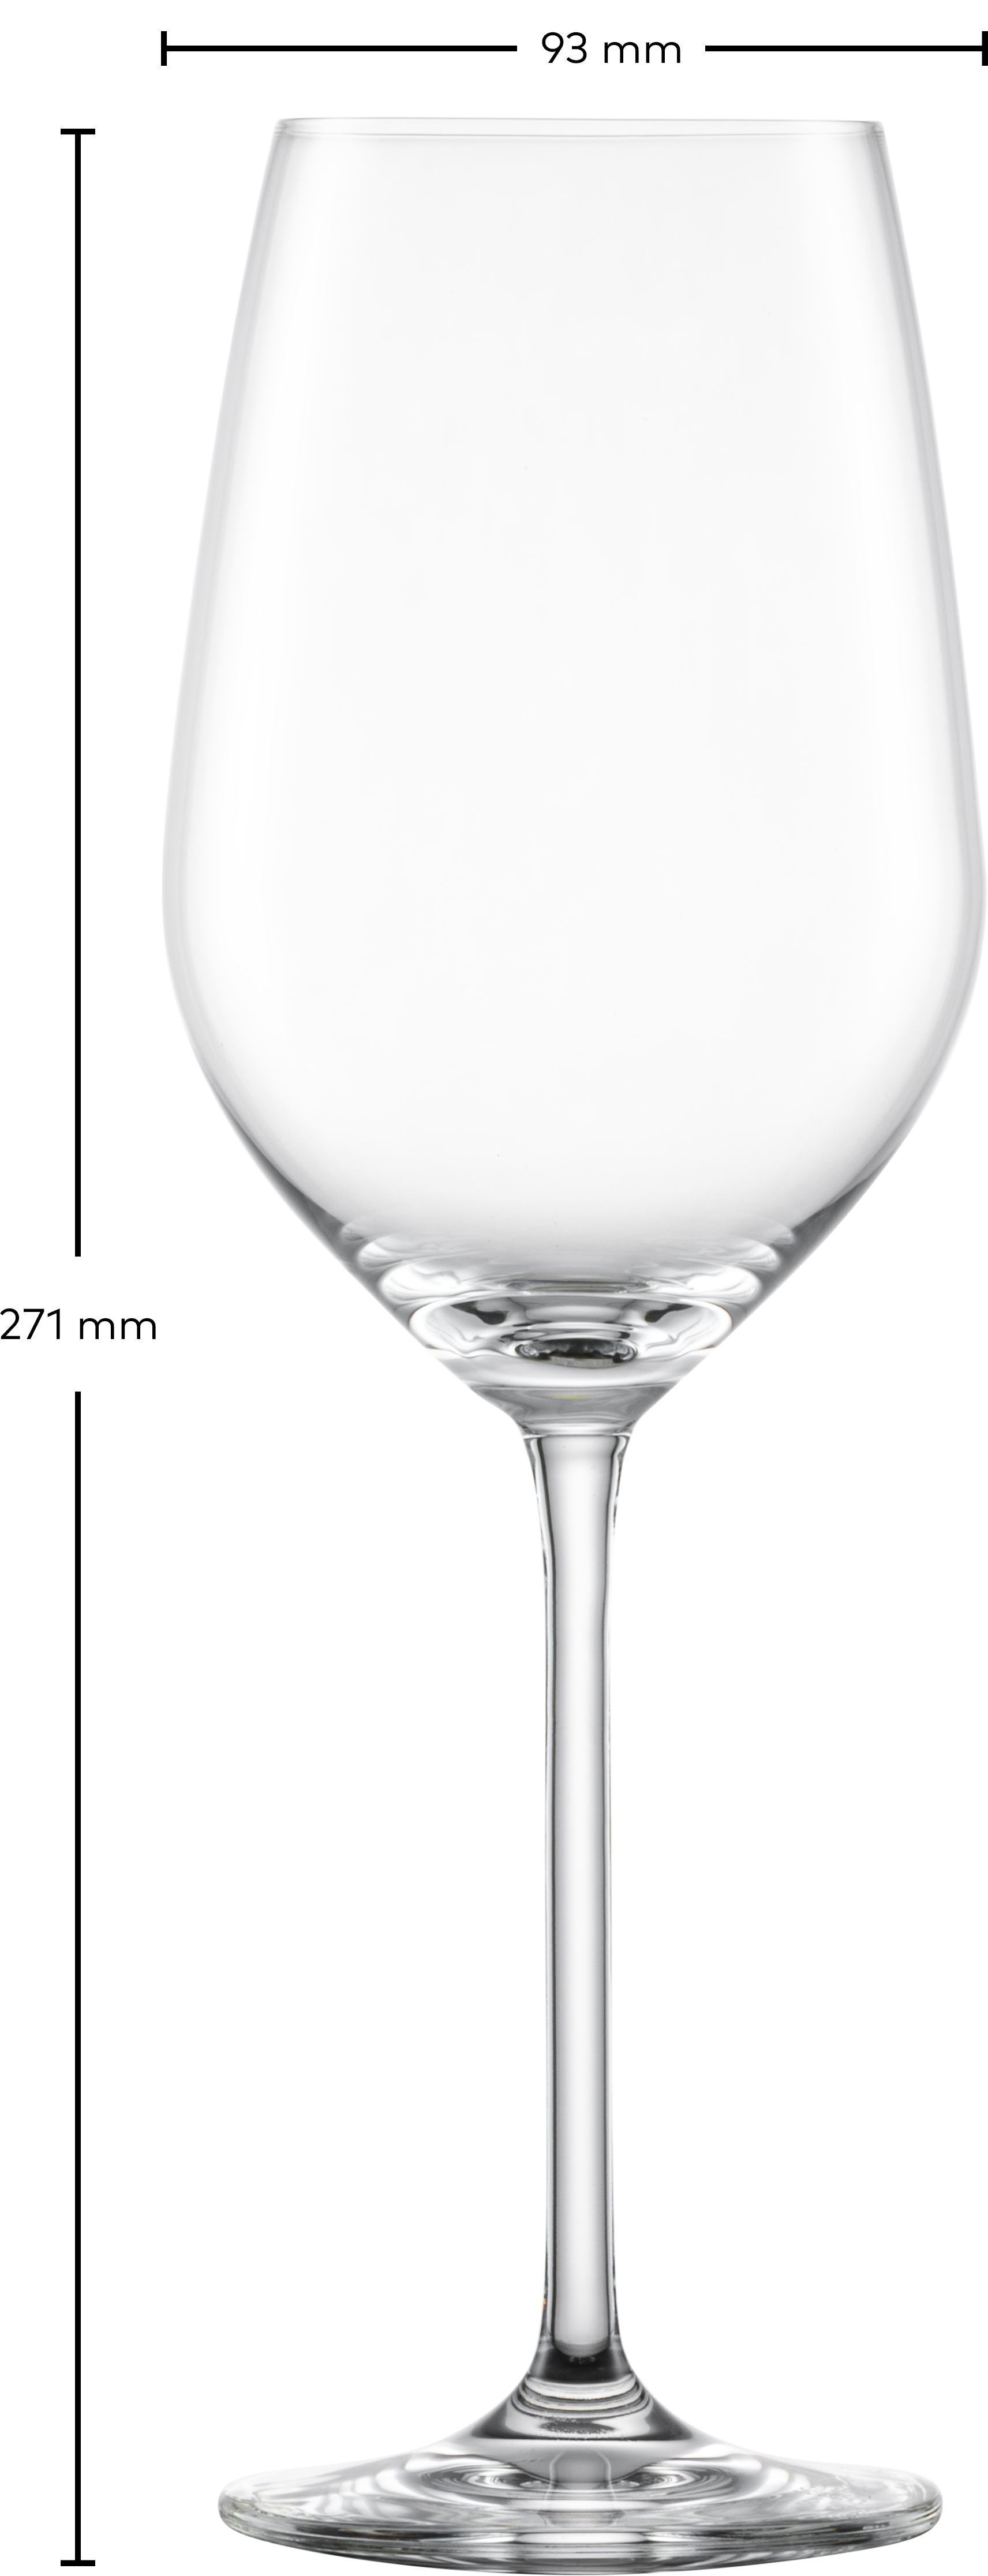 Schott Zwiesel Tritan Crystal, Fortissimo Champagne Flute, Single